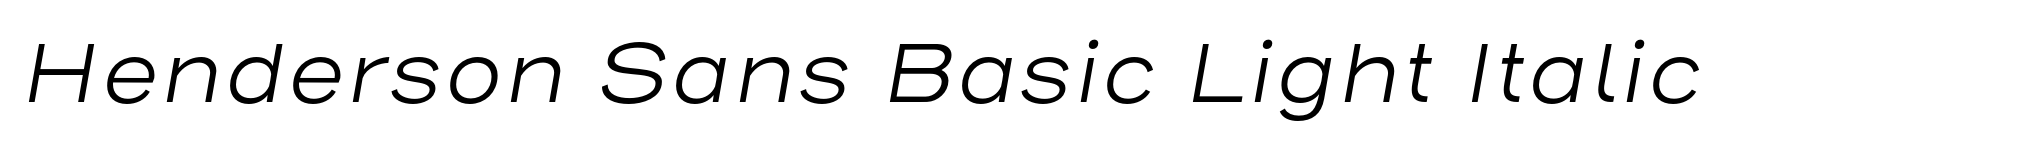 Henderson Sans Basic Light Italic image